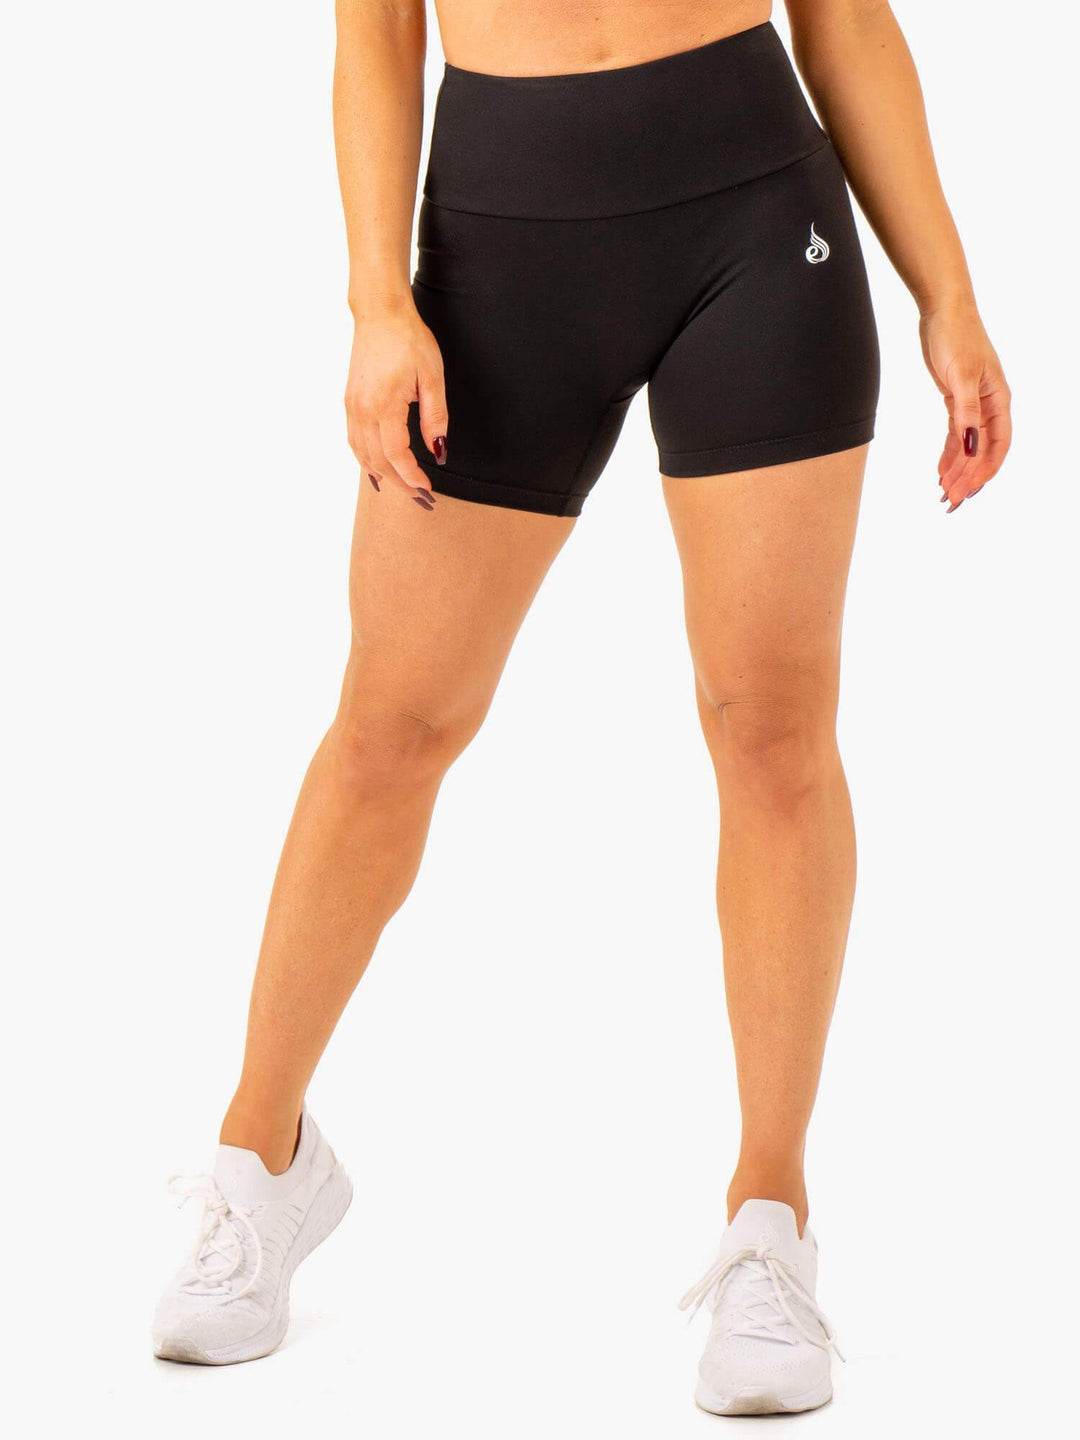 Vital Mid Length Scrunch Shorts   Black   Ryderwear